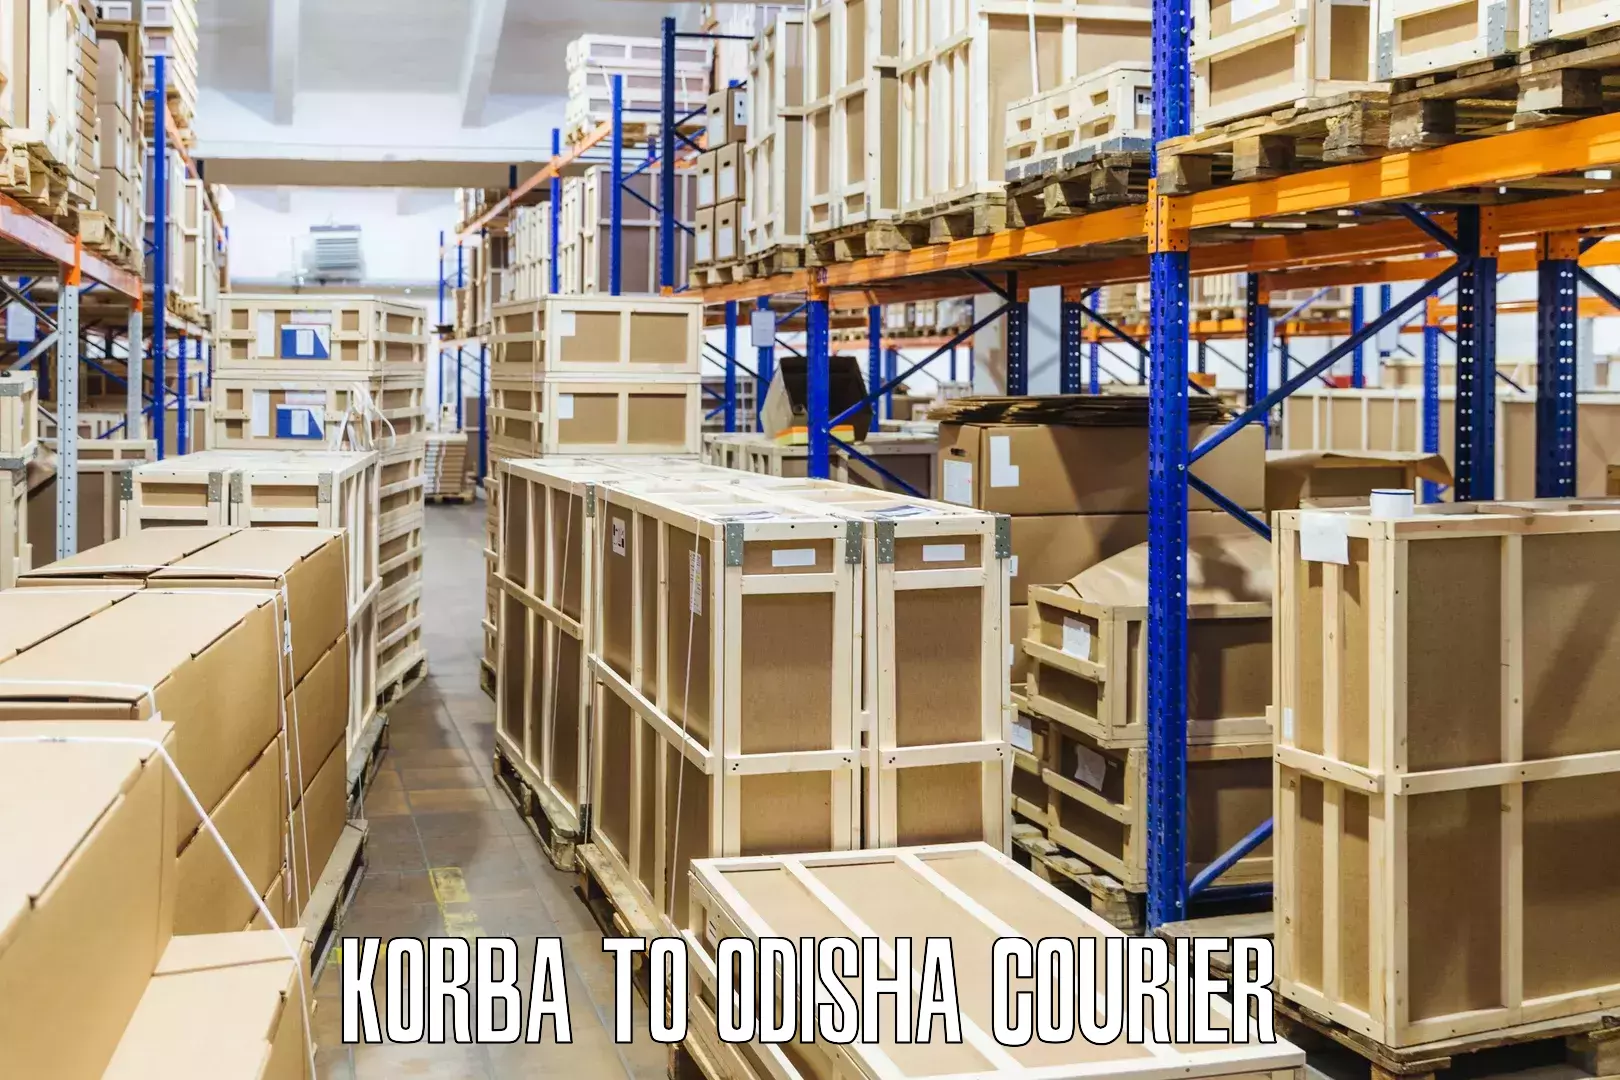 Courier service innovation Korba to Chhendipada